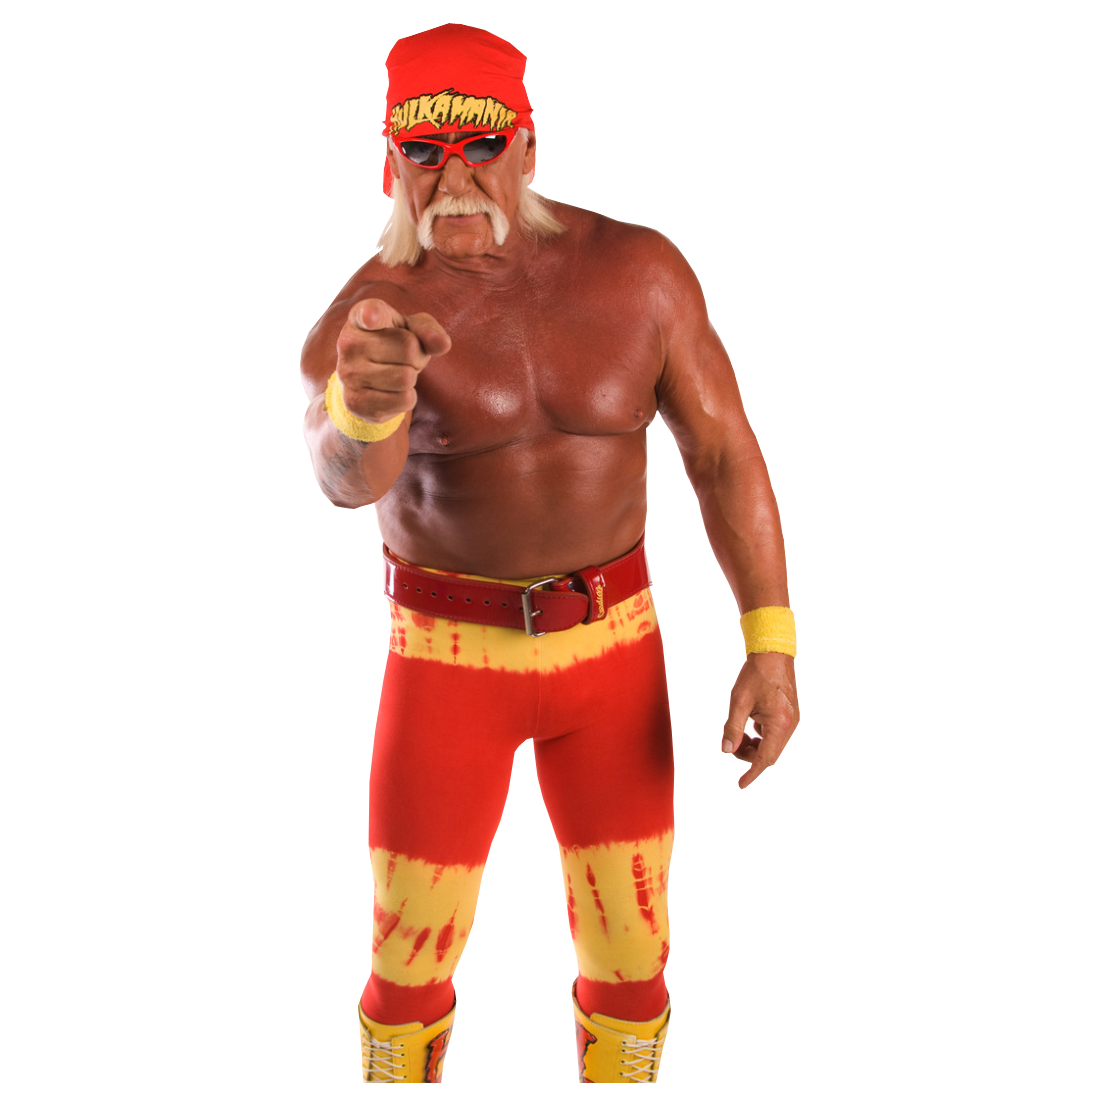 Hulk Hogan Transparent Picture